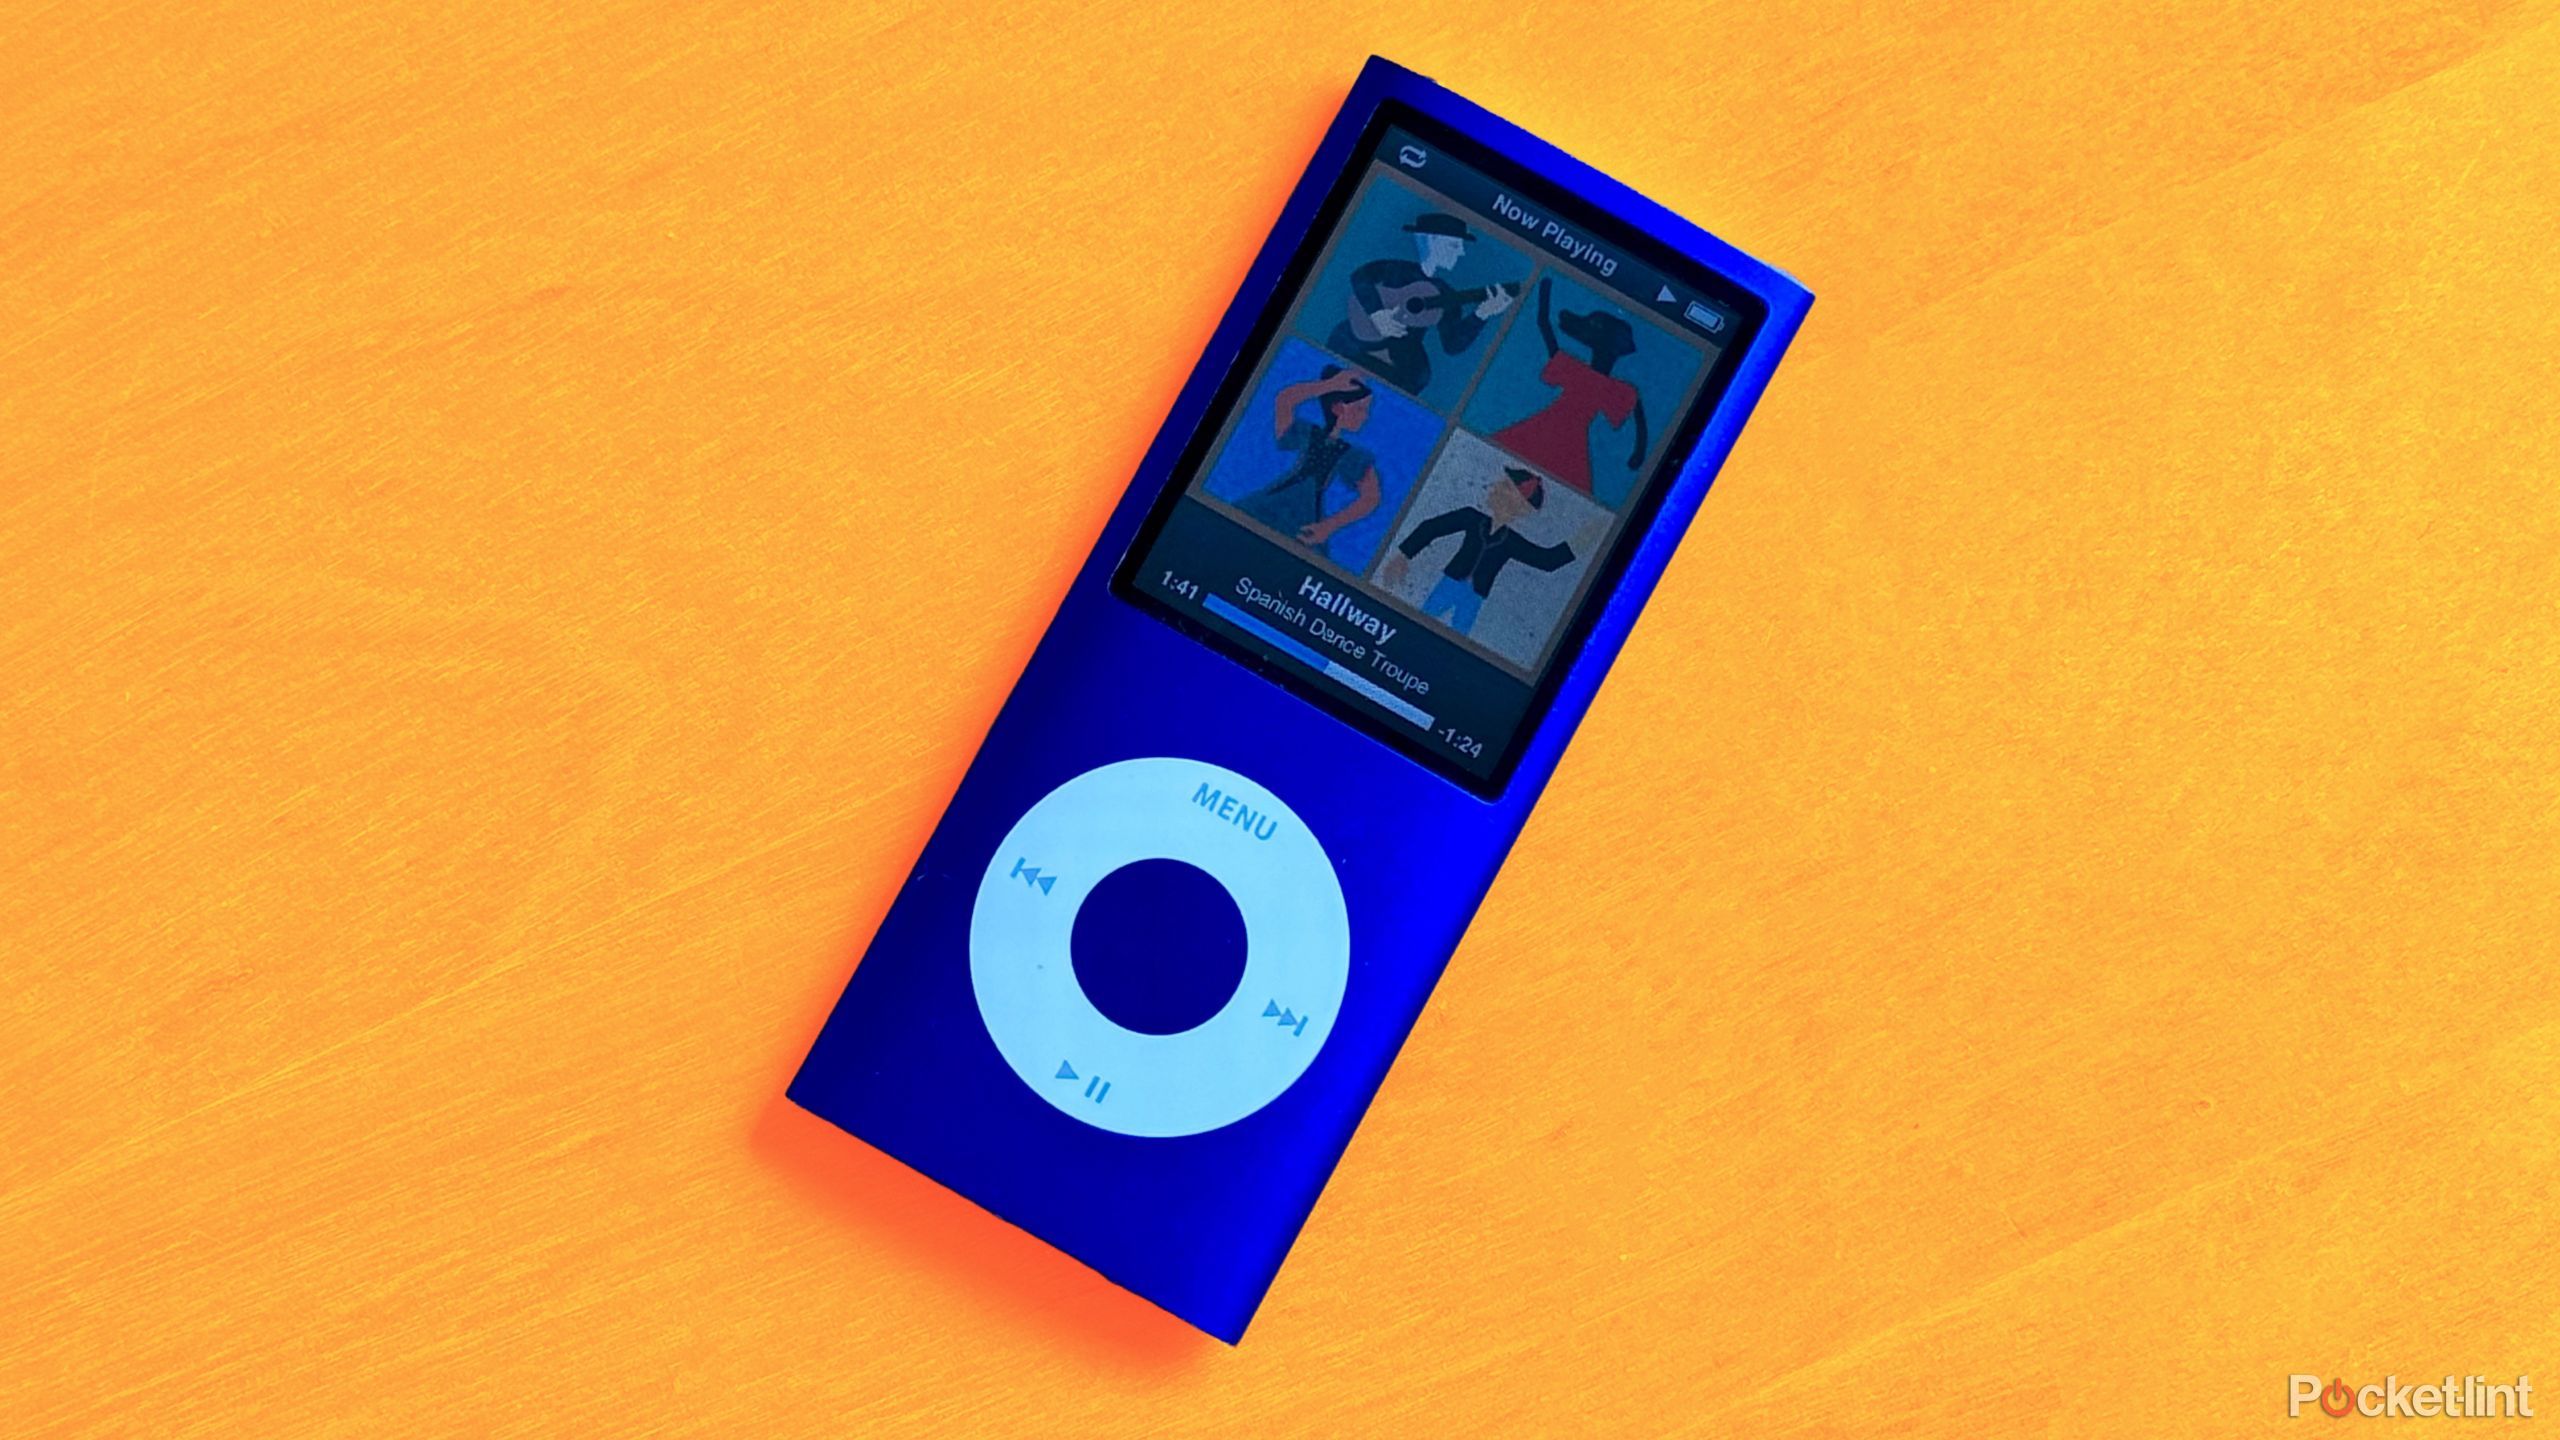 iPod nano featured image